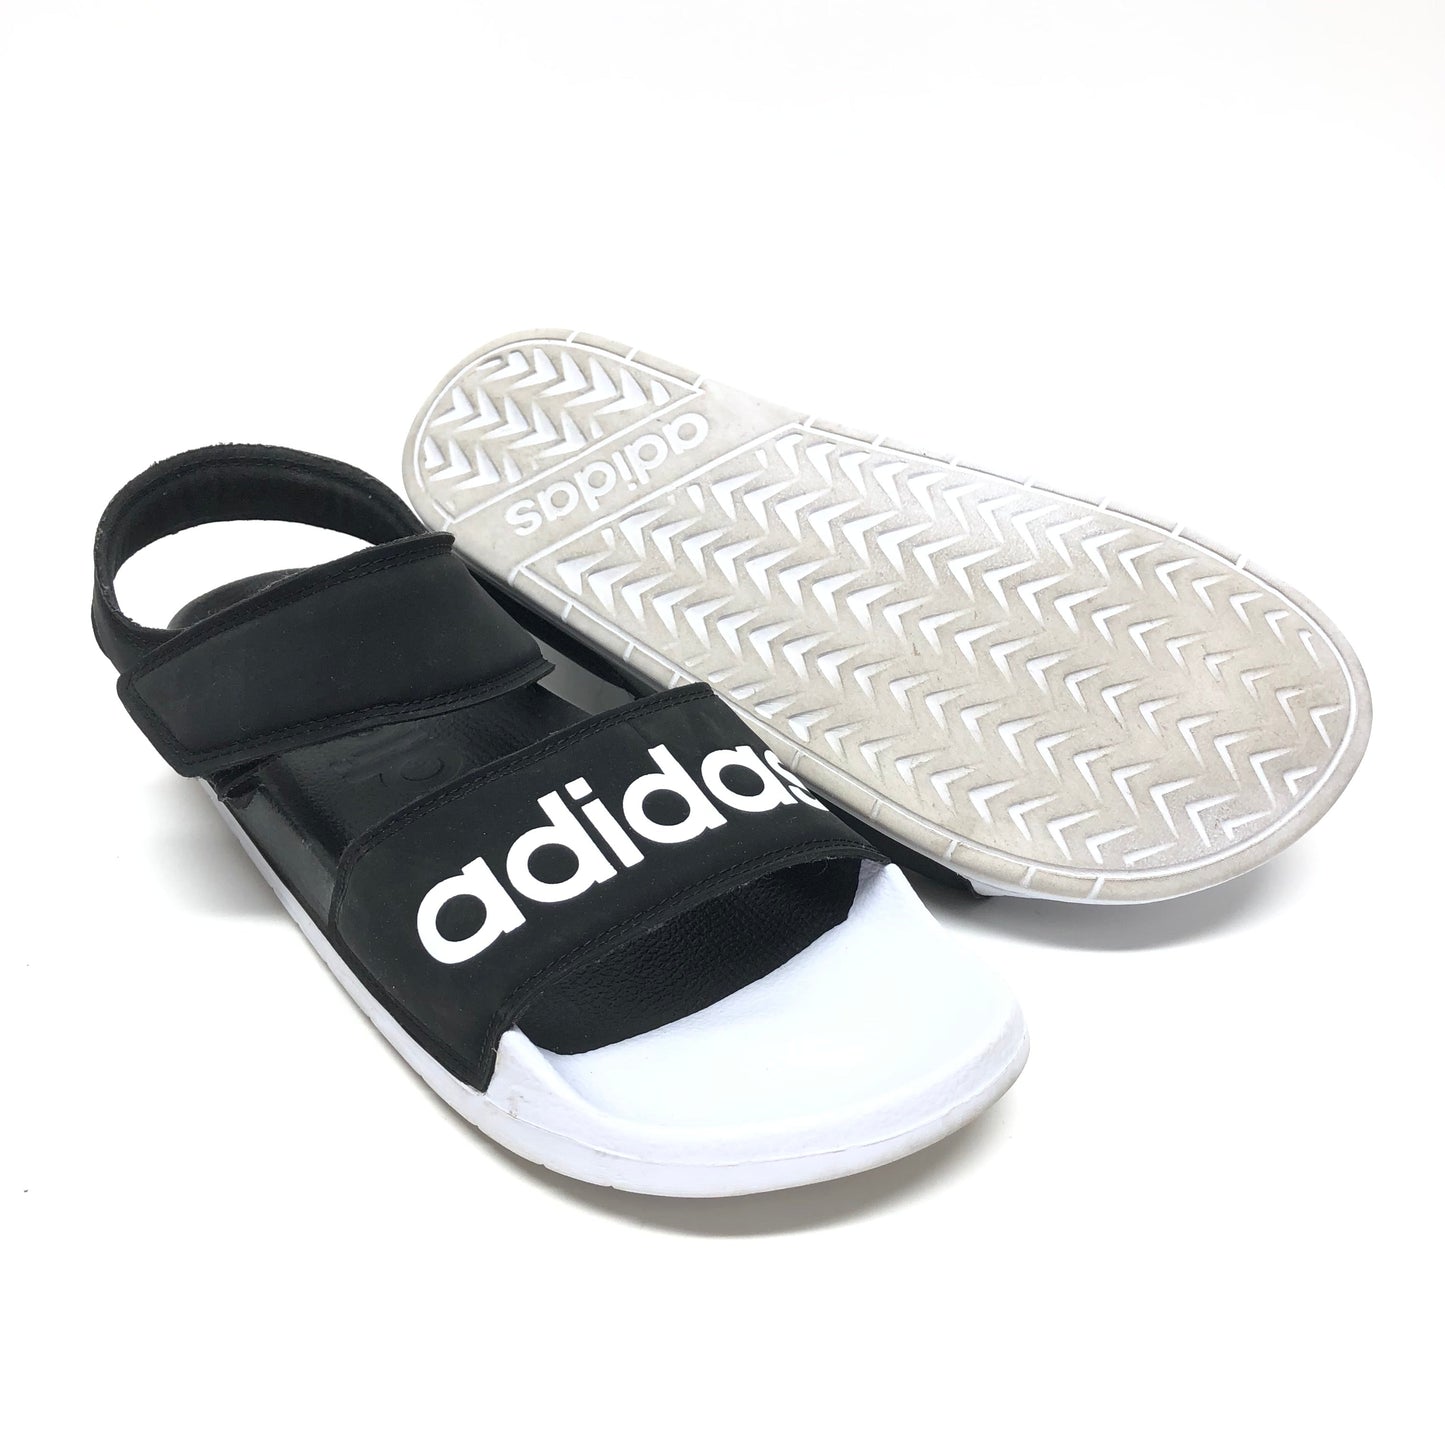 Black & White Sandals Sport Adidas, Size 8